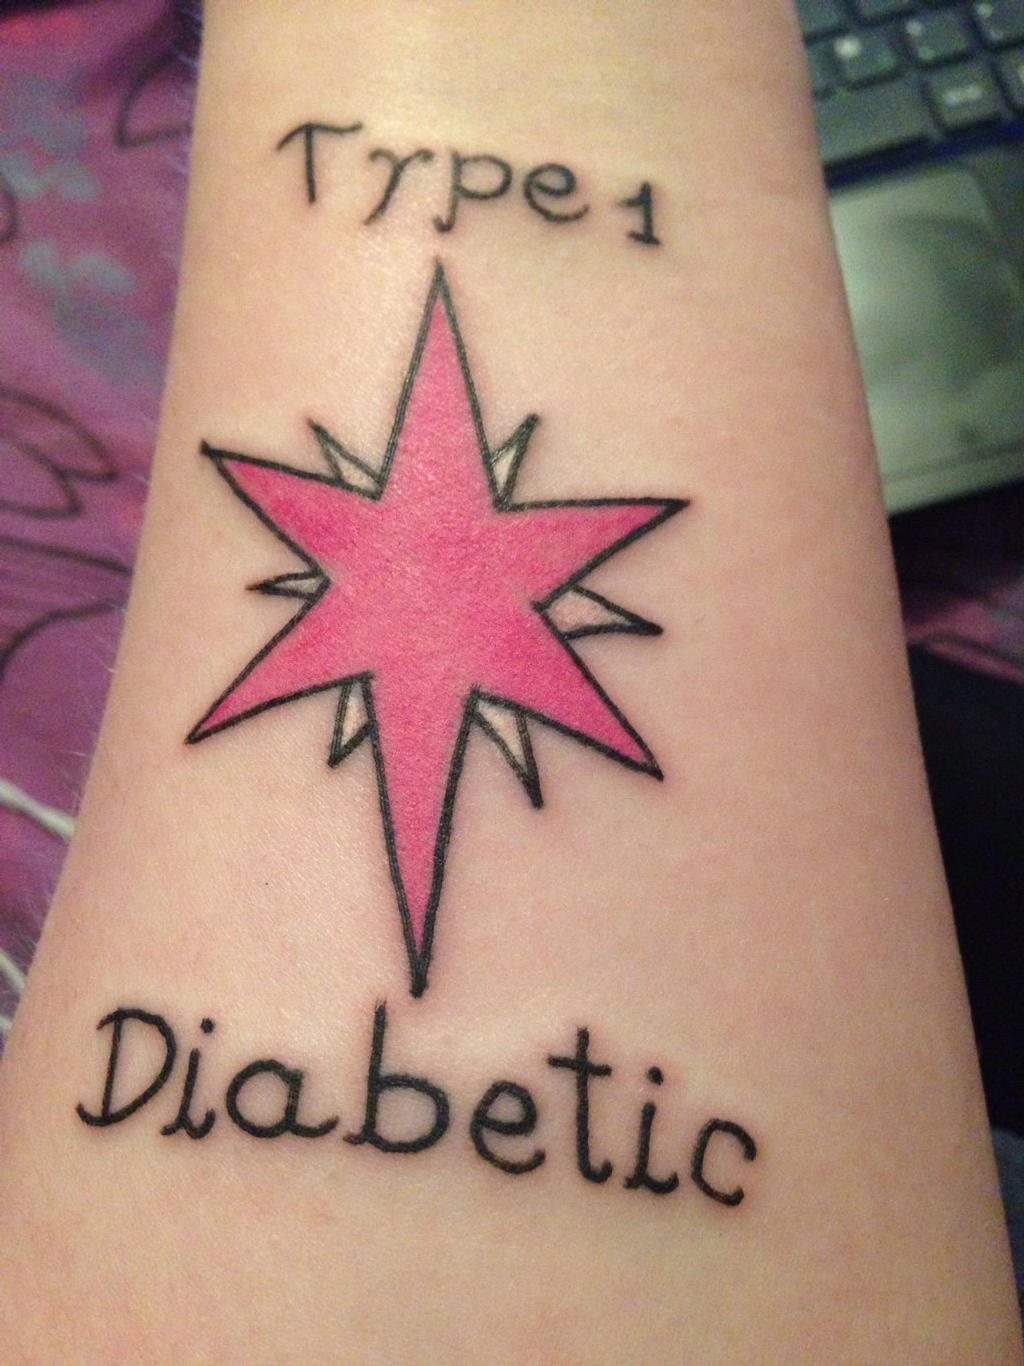 Type 1 diabetic Medic Alert Tattoo by AbiTheOtakuGirl on DeviantArt